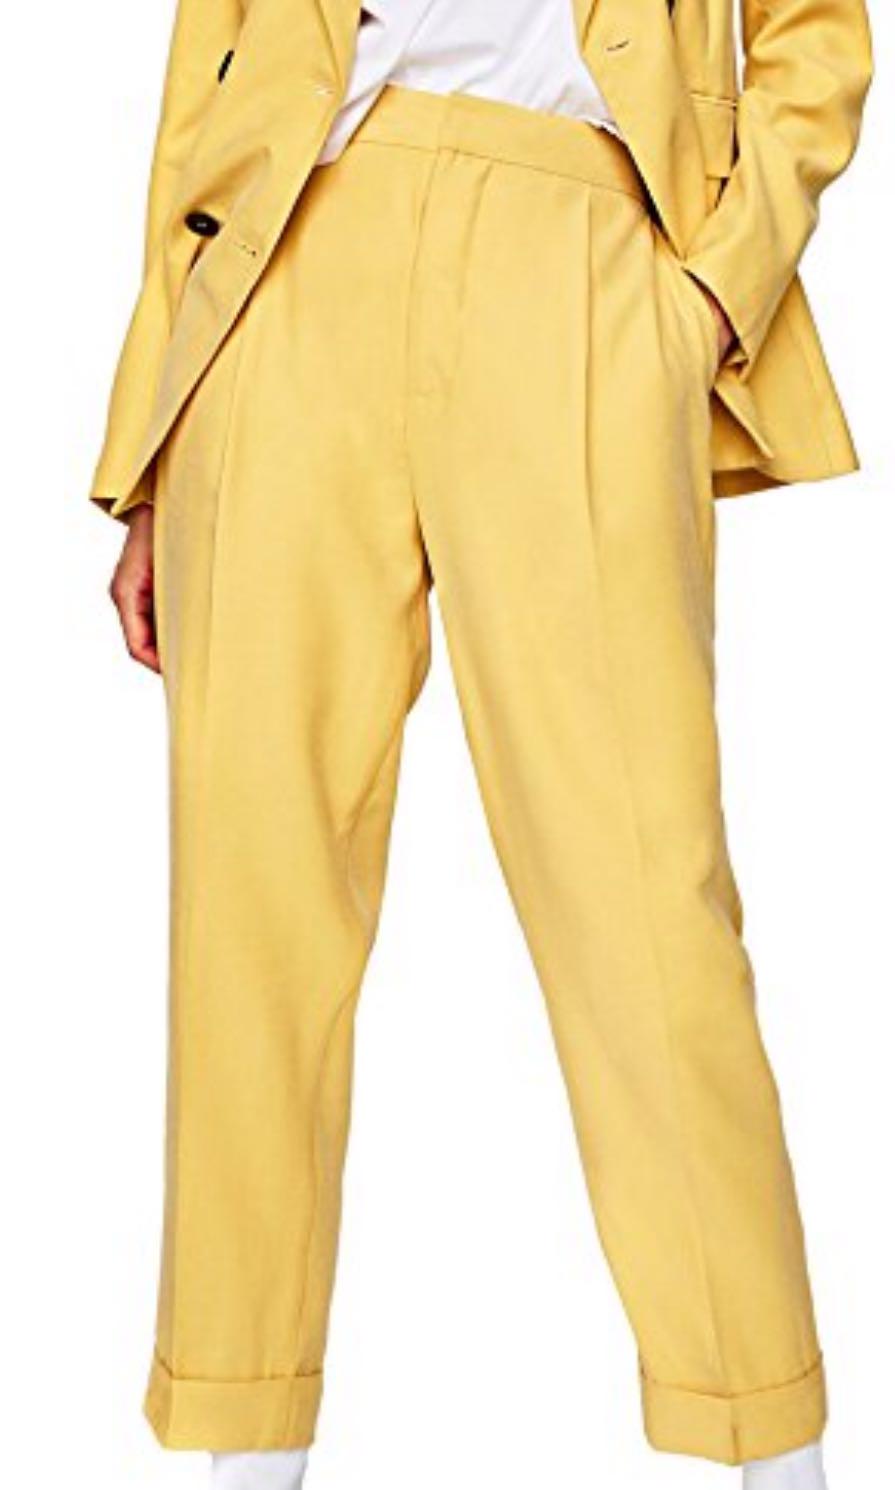 zara yellow pant suit